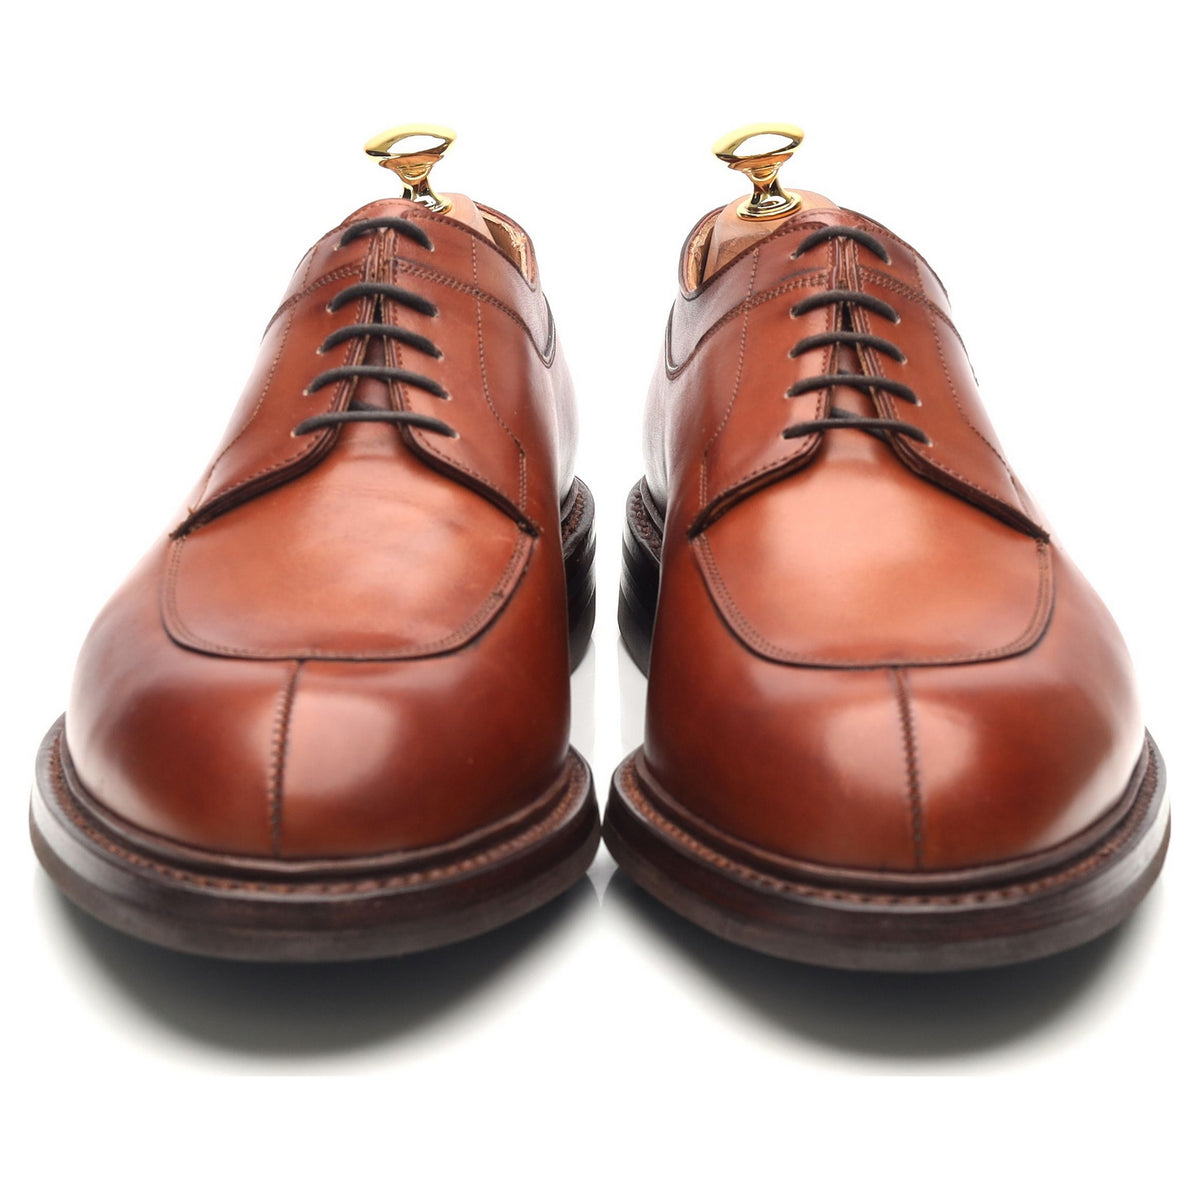 &#39;Shelton&#39; Tan Brown Leather Split Toe Derby UK 10.5 E